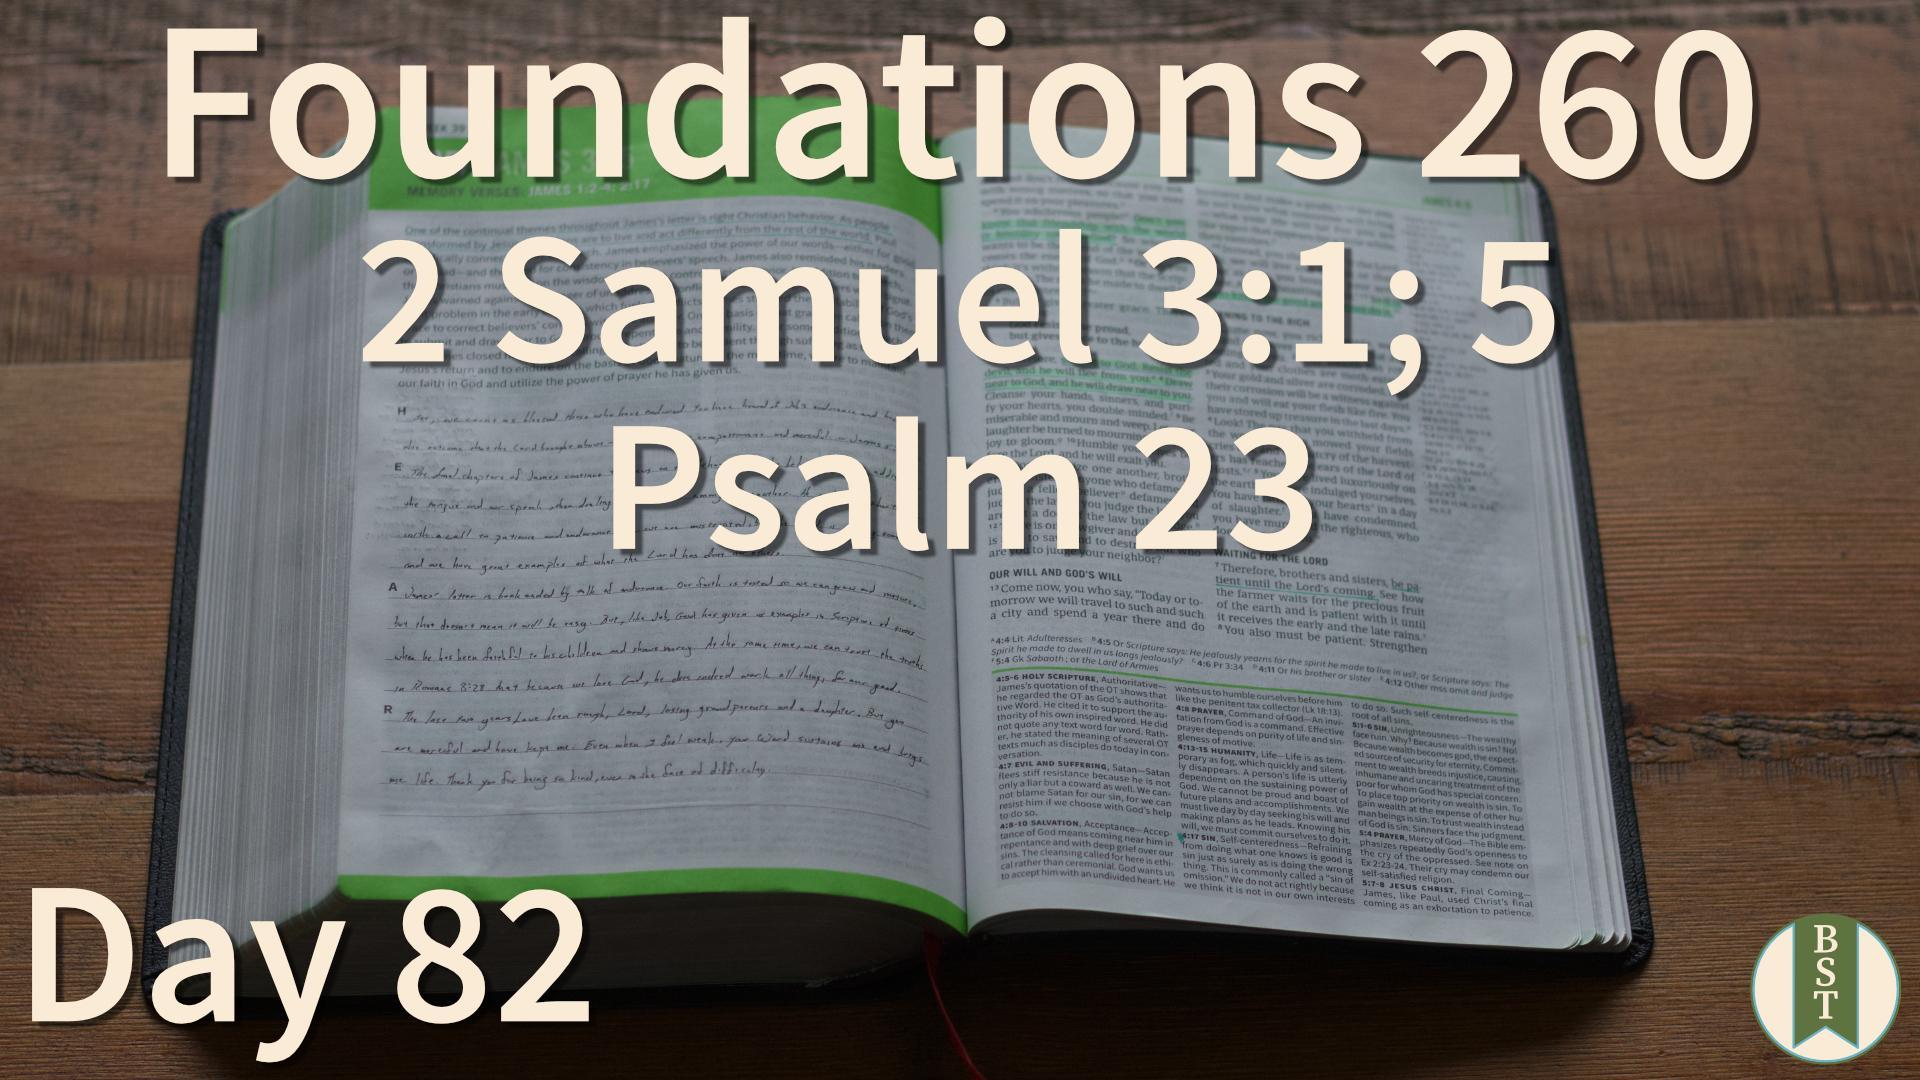 F260 Day 82: 2 Samuel 3:1; 5; Psalm 23